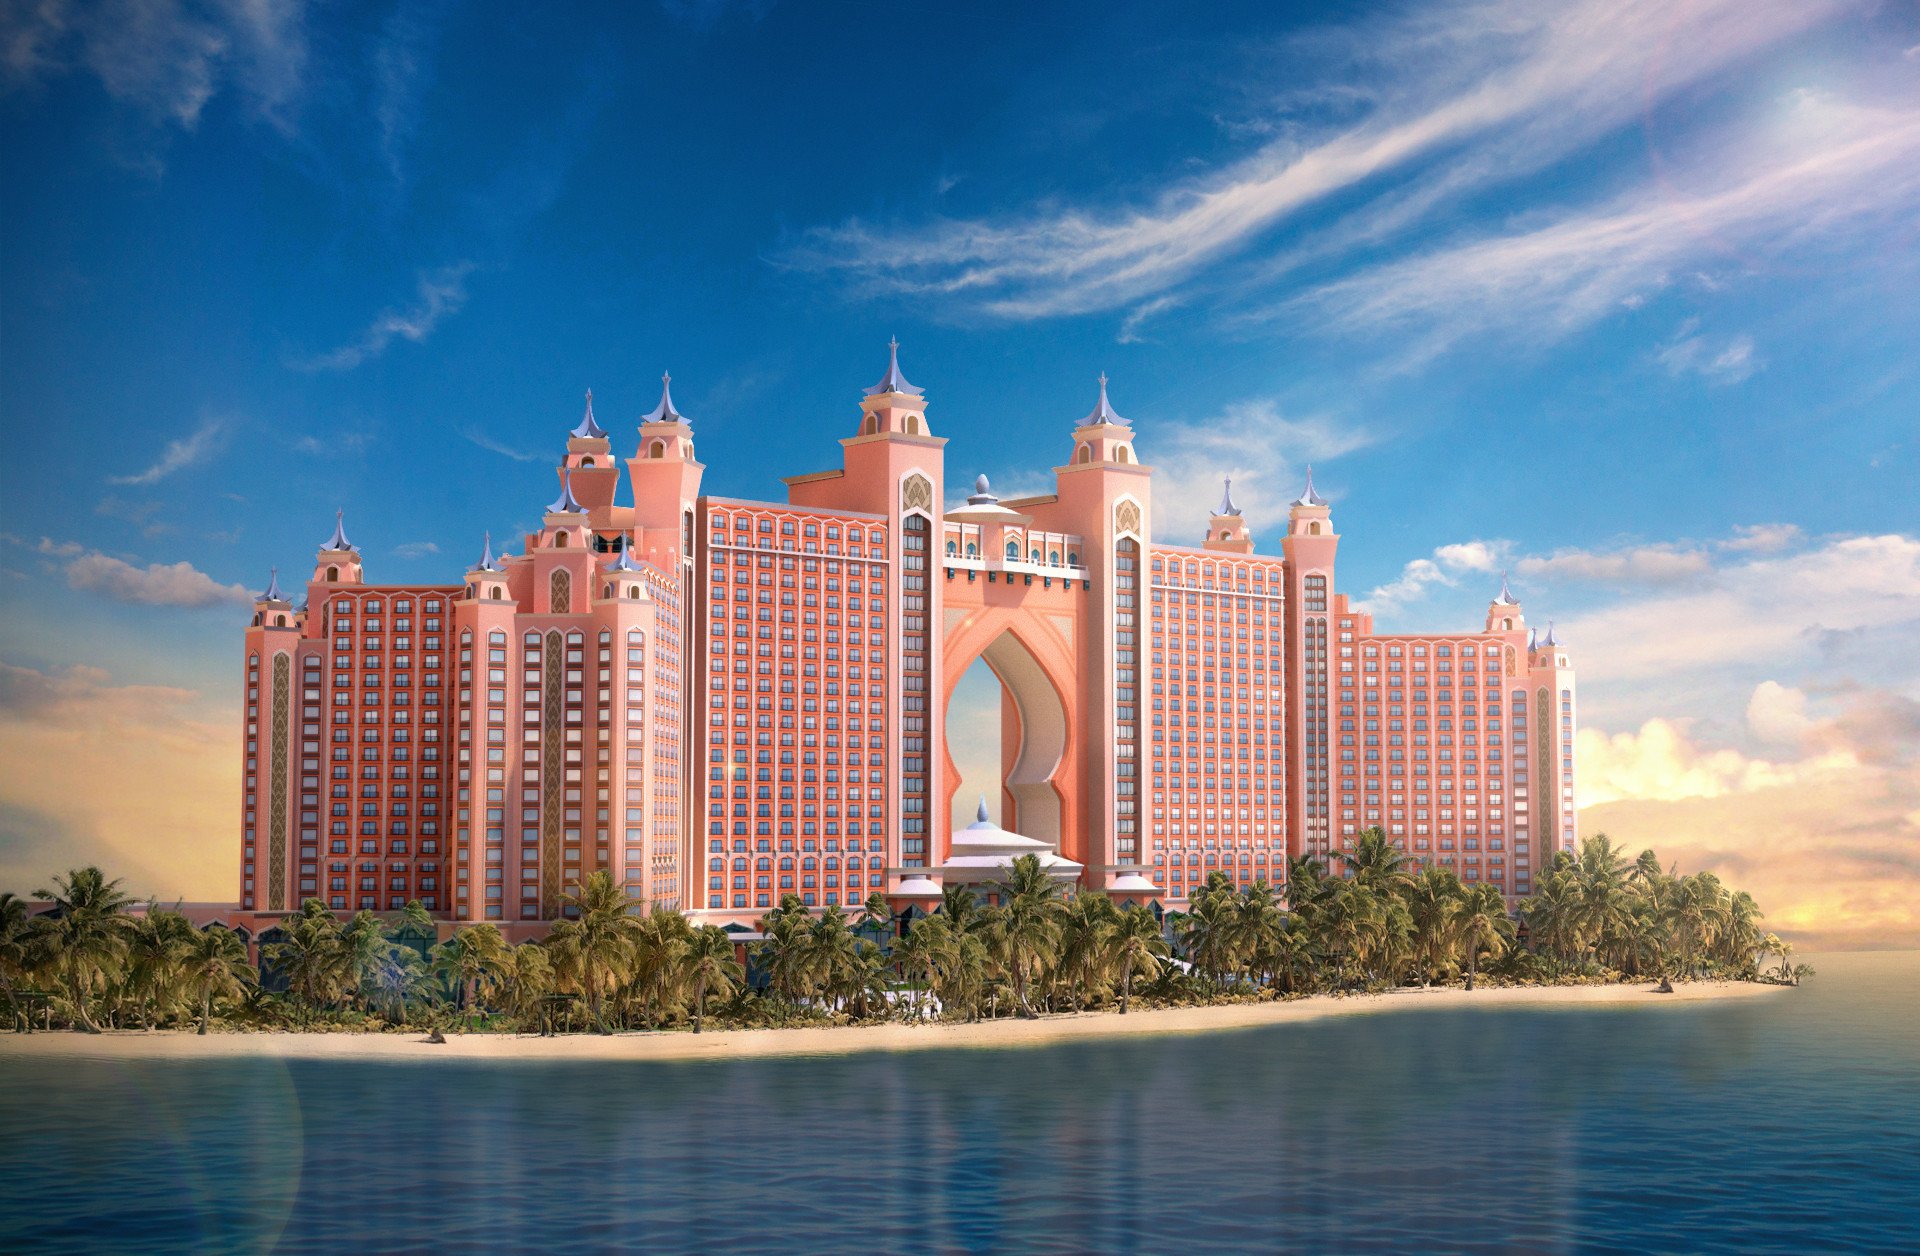 Atlantis ru. Отель Атлантис Дубай. Атлантис зе пальм Дубай. Атлантик Дубай отель. Пальма Джумейра Атлантис.